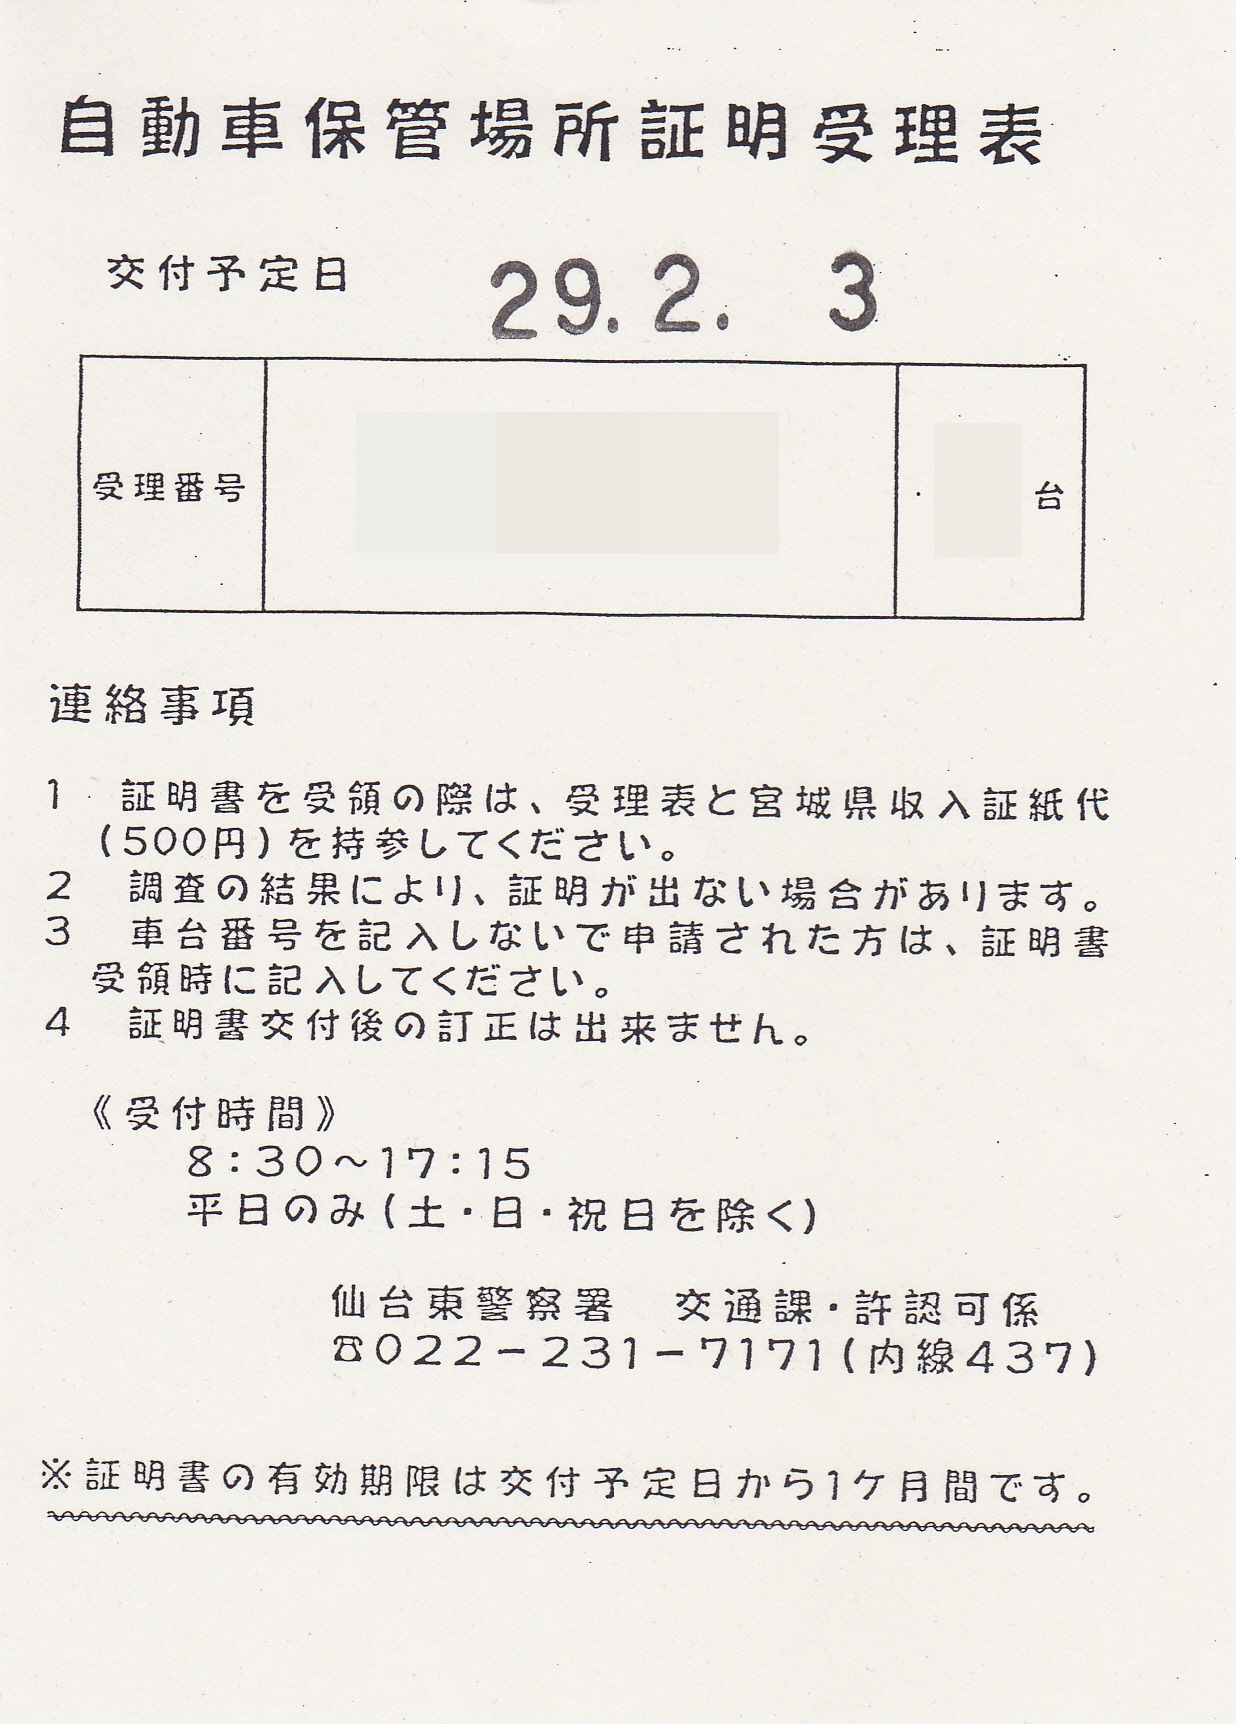 希望ナンバー申込と車庫証明申請 車庫証明 名義変更サポート 仙台 宮城